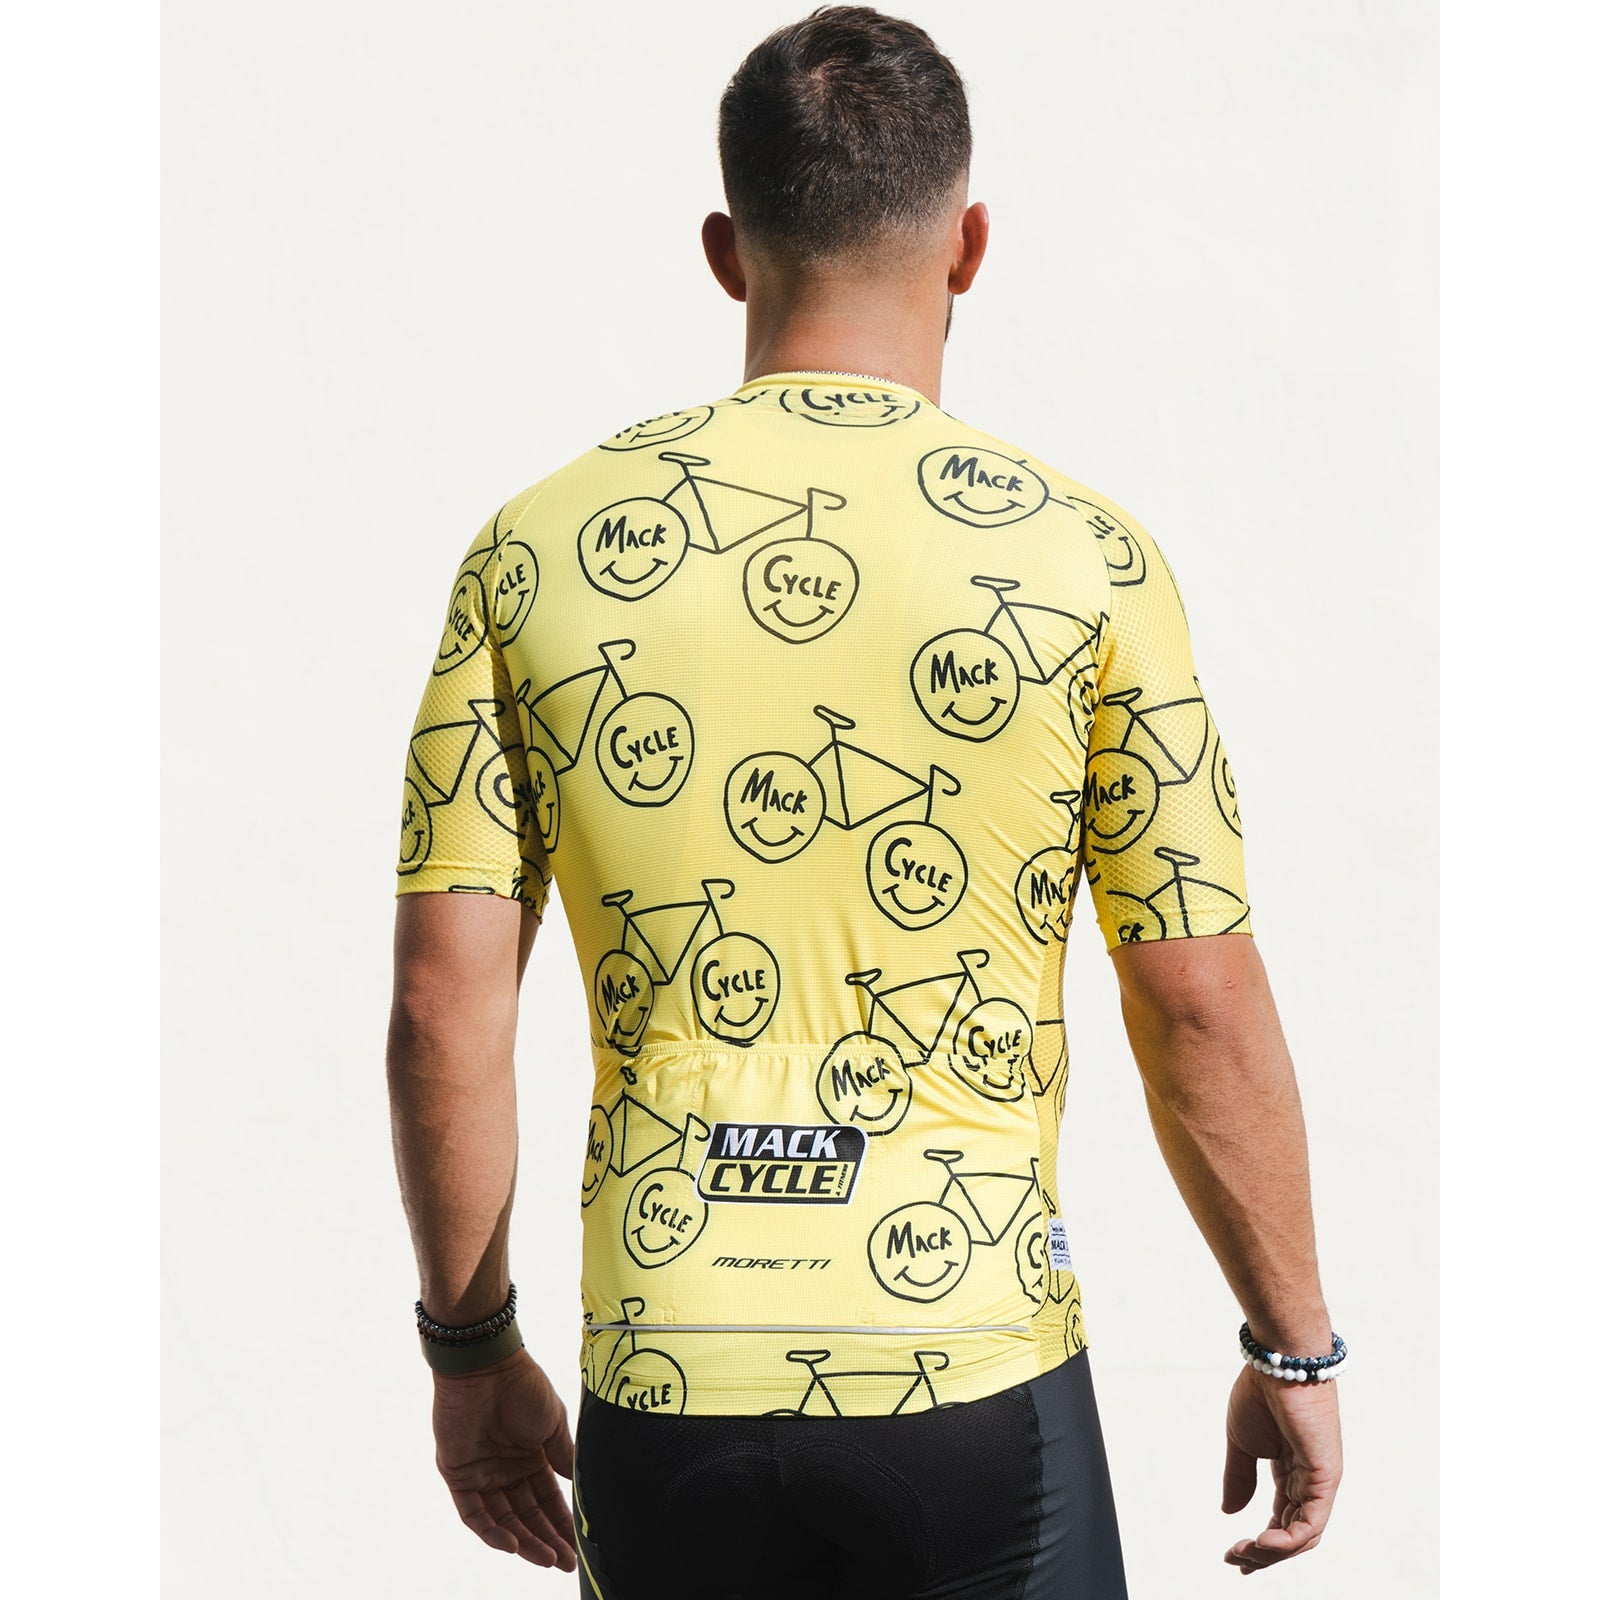 Mack Cycle Happy Riding Men's Bike Jersey